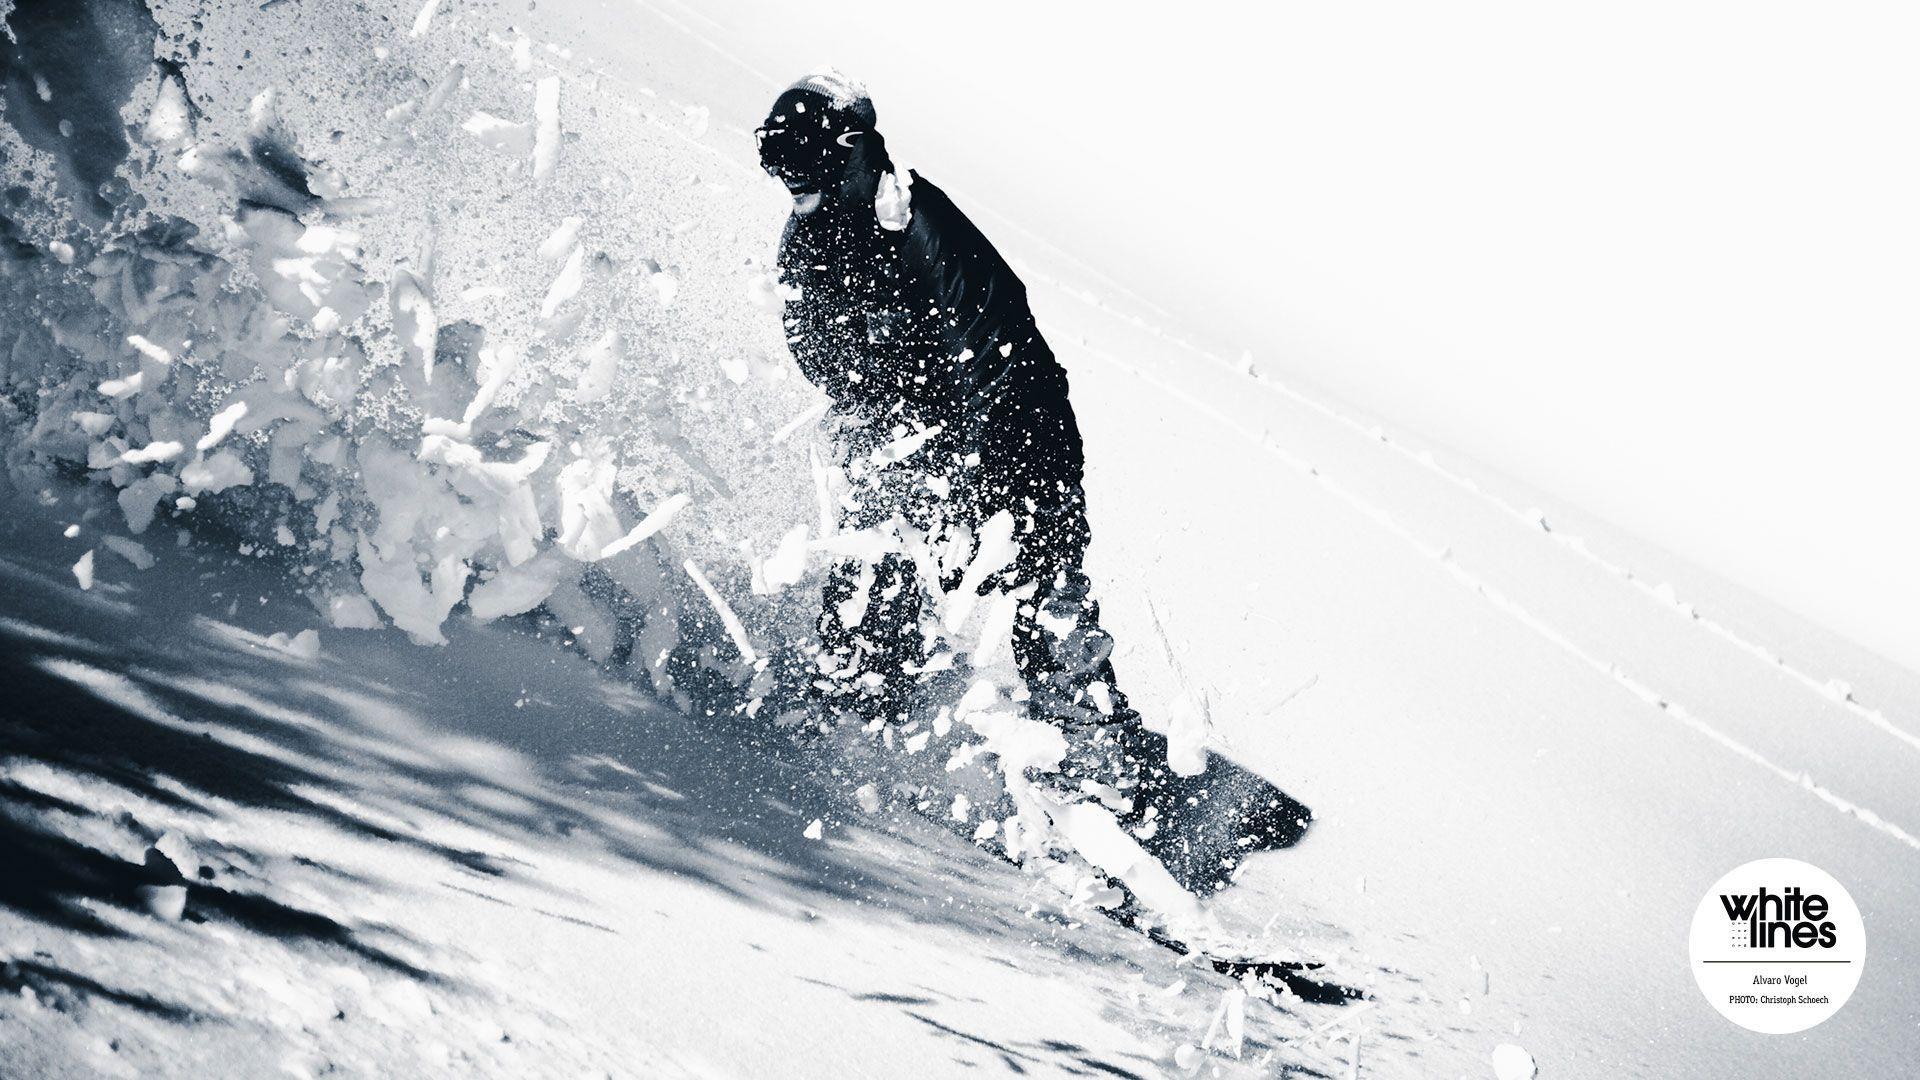 snowboarding wallpaper